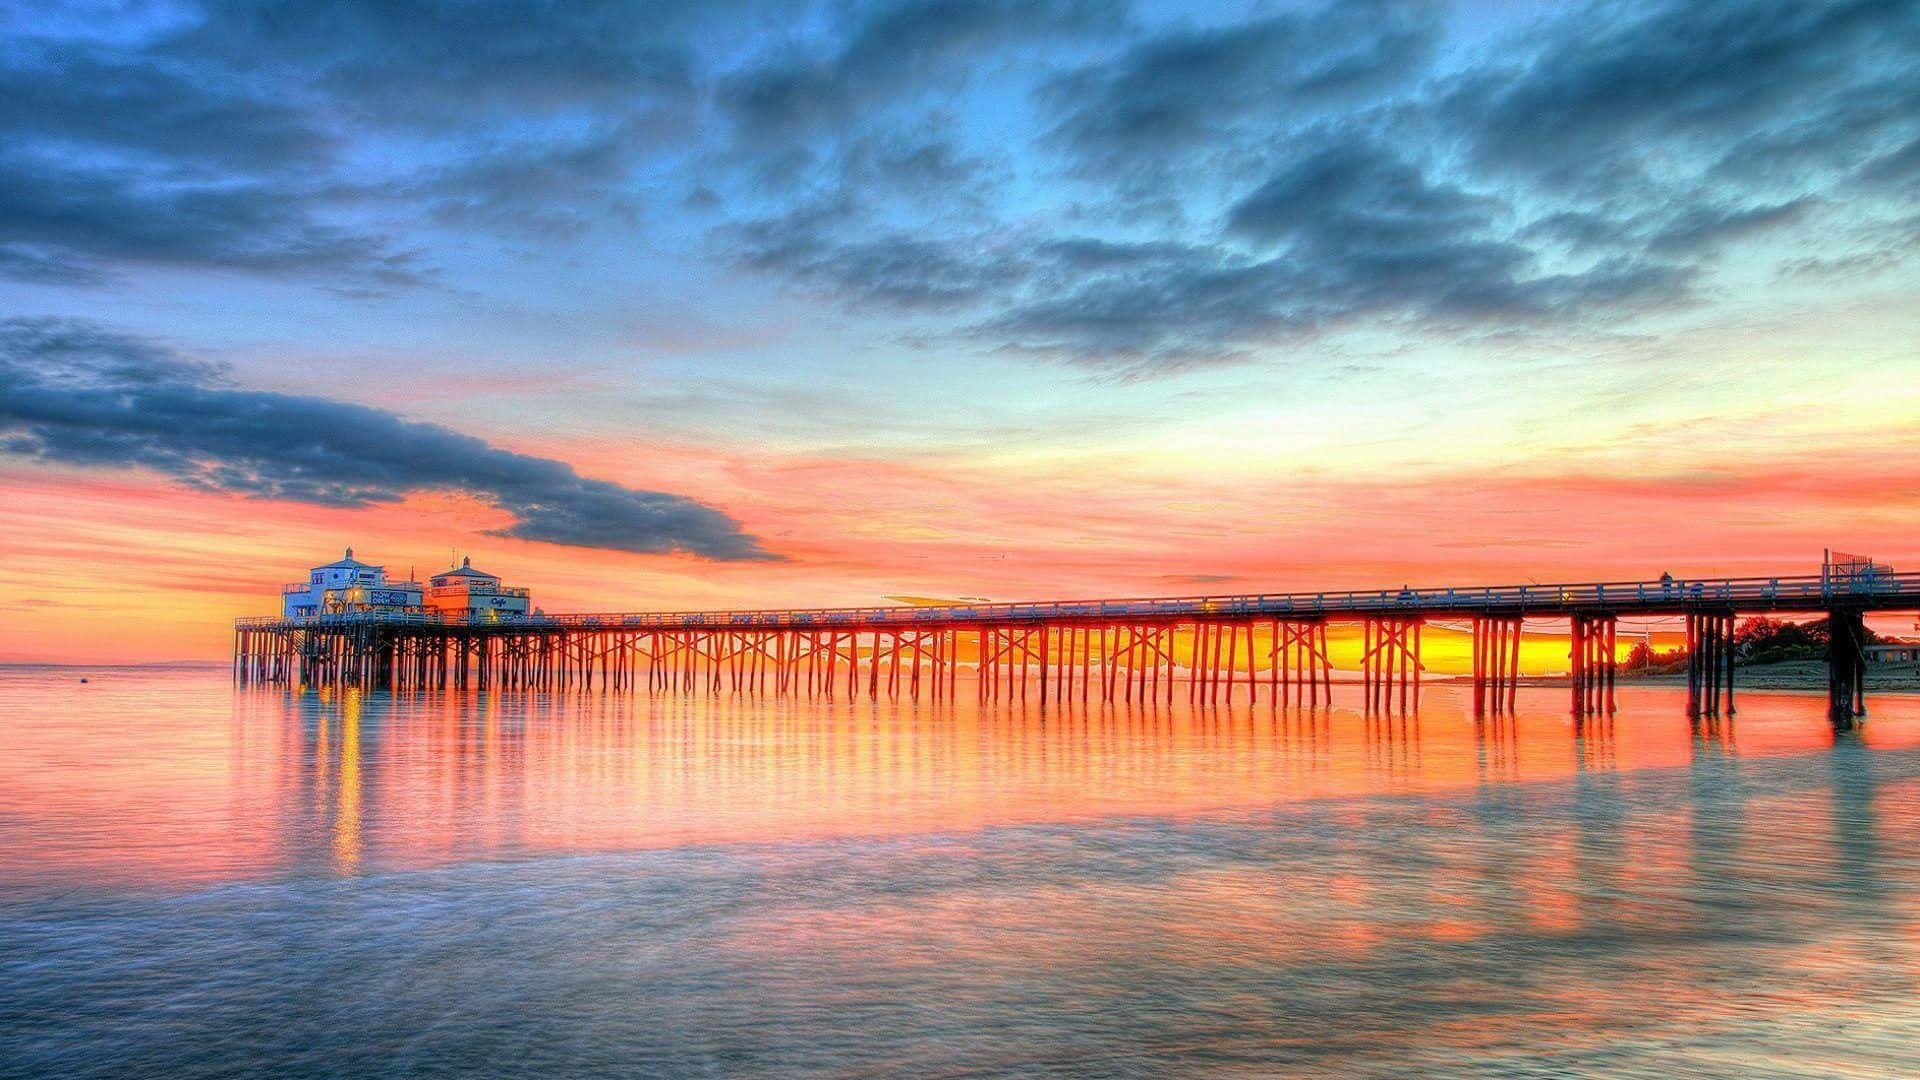 "Relax and Enjoy the Beautiful Skyline of Malibu, California"